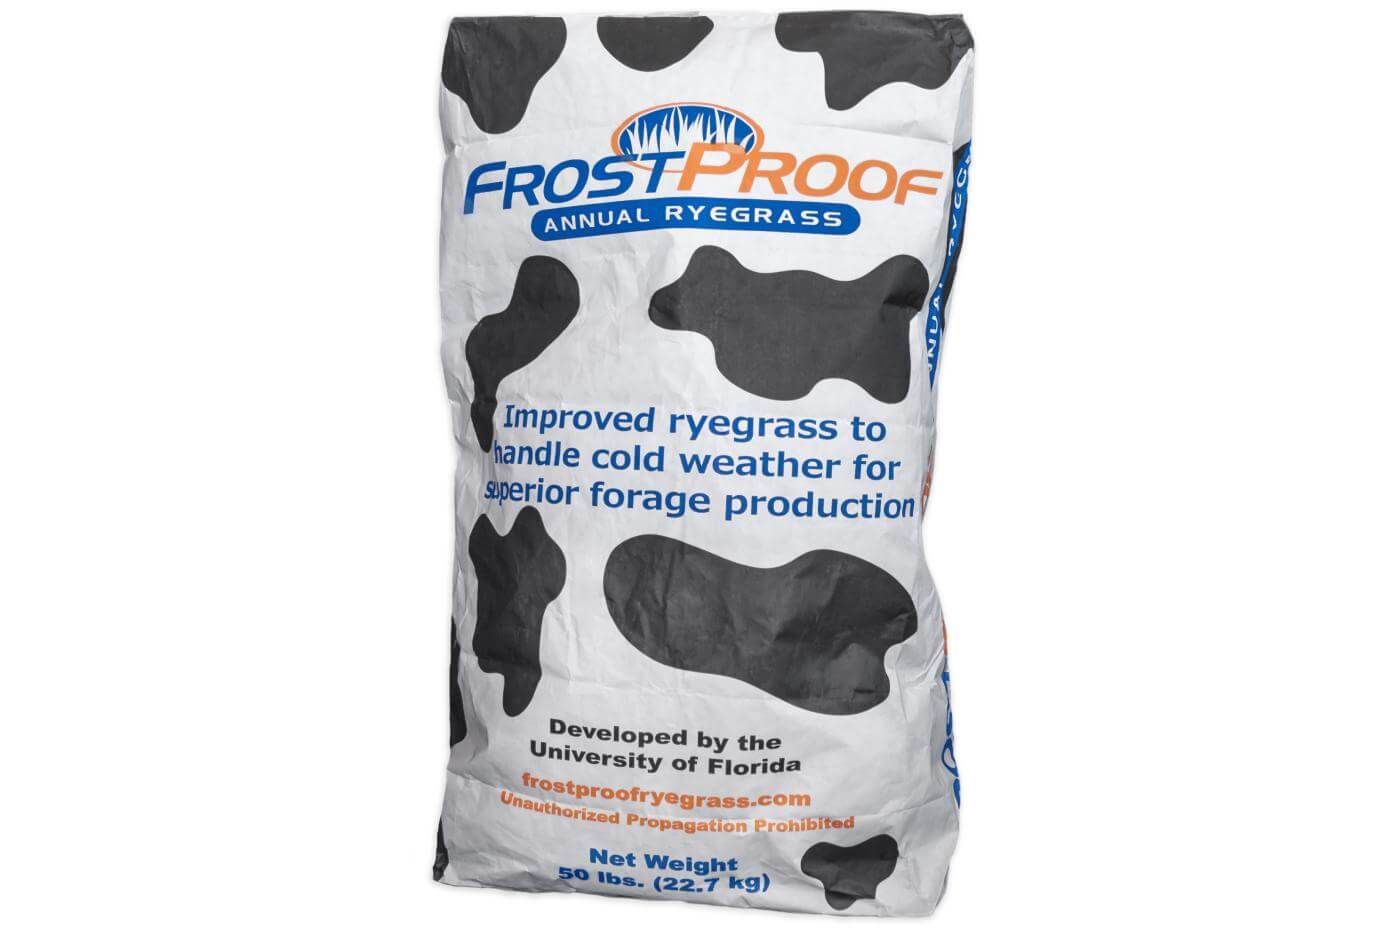 FrostProof bag